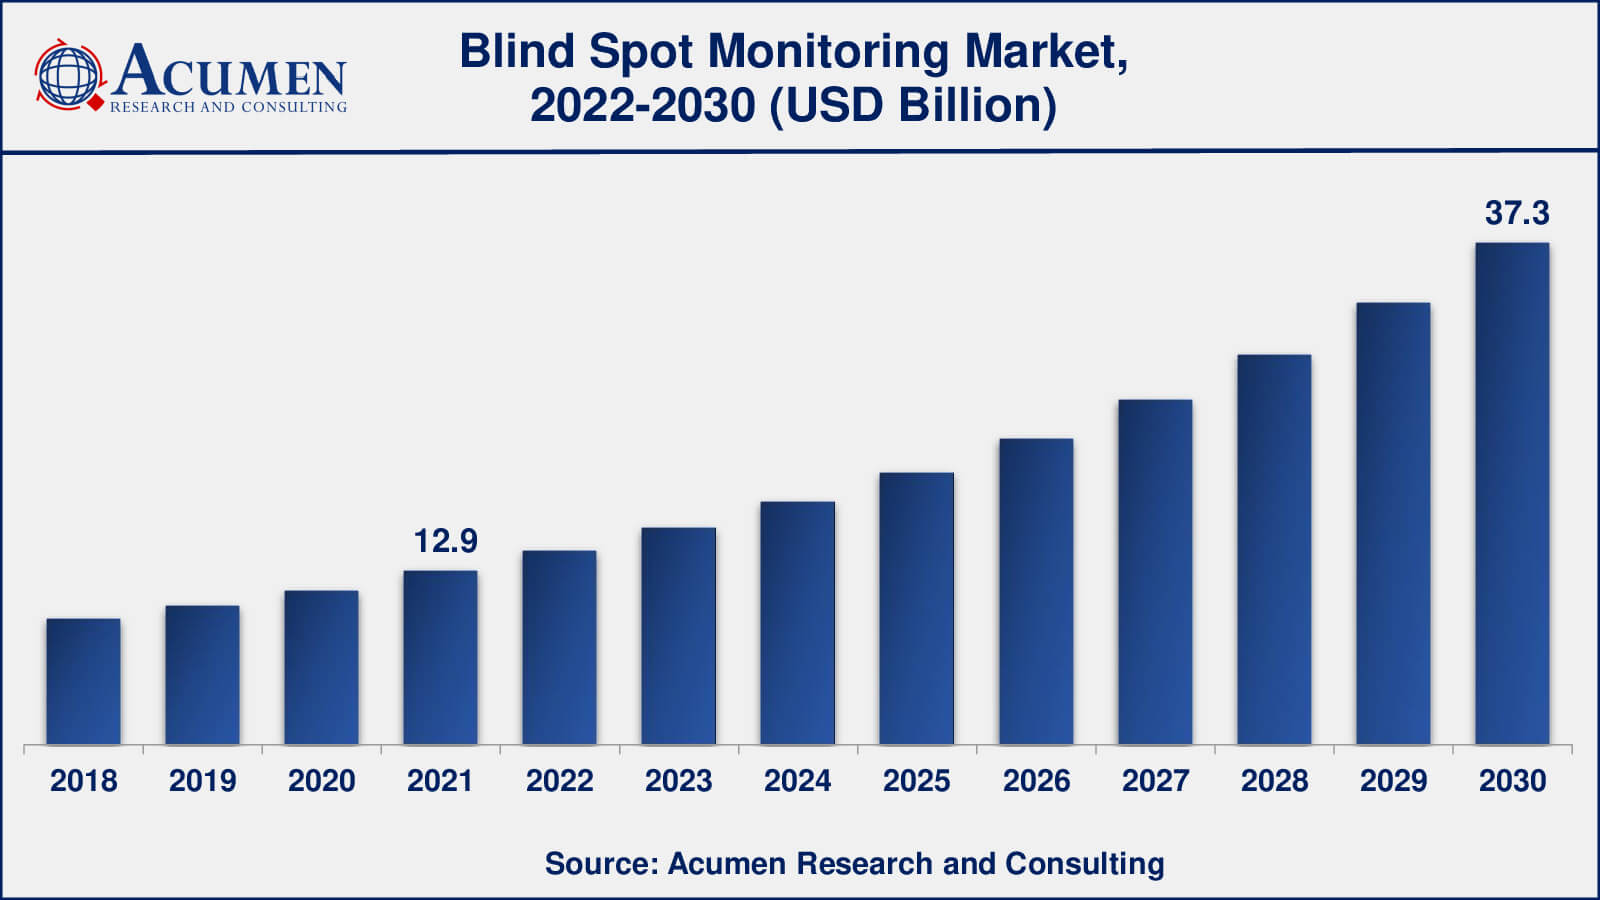 Blind Spot Monitoring Market Drivers